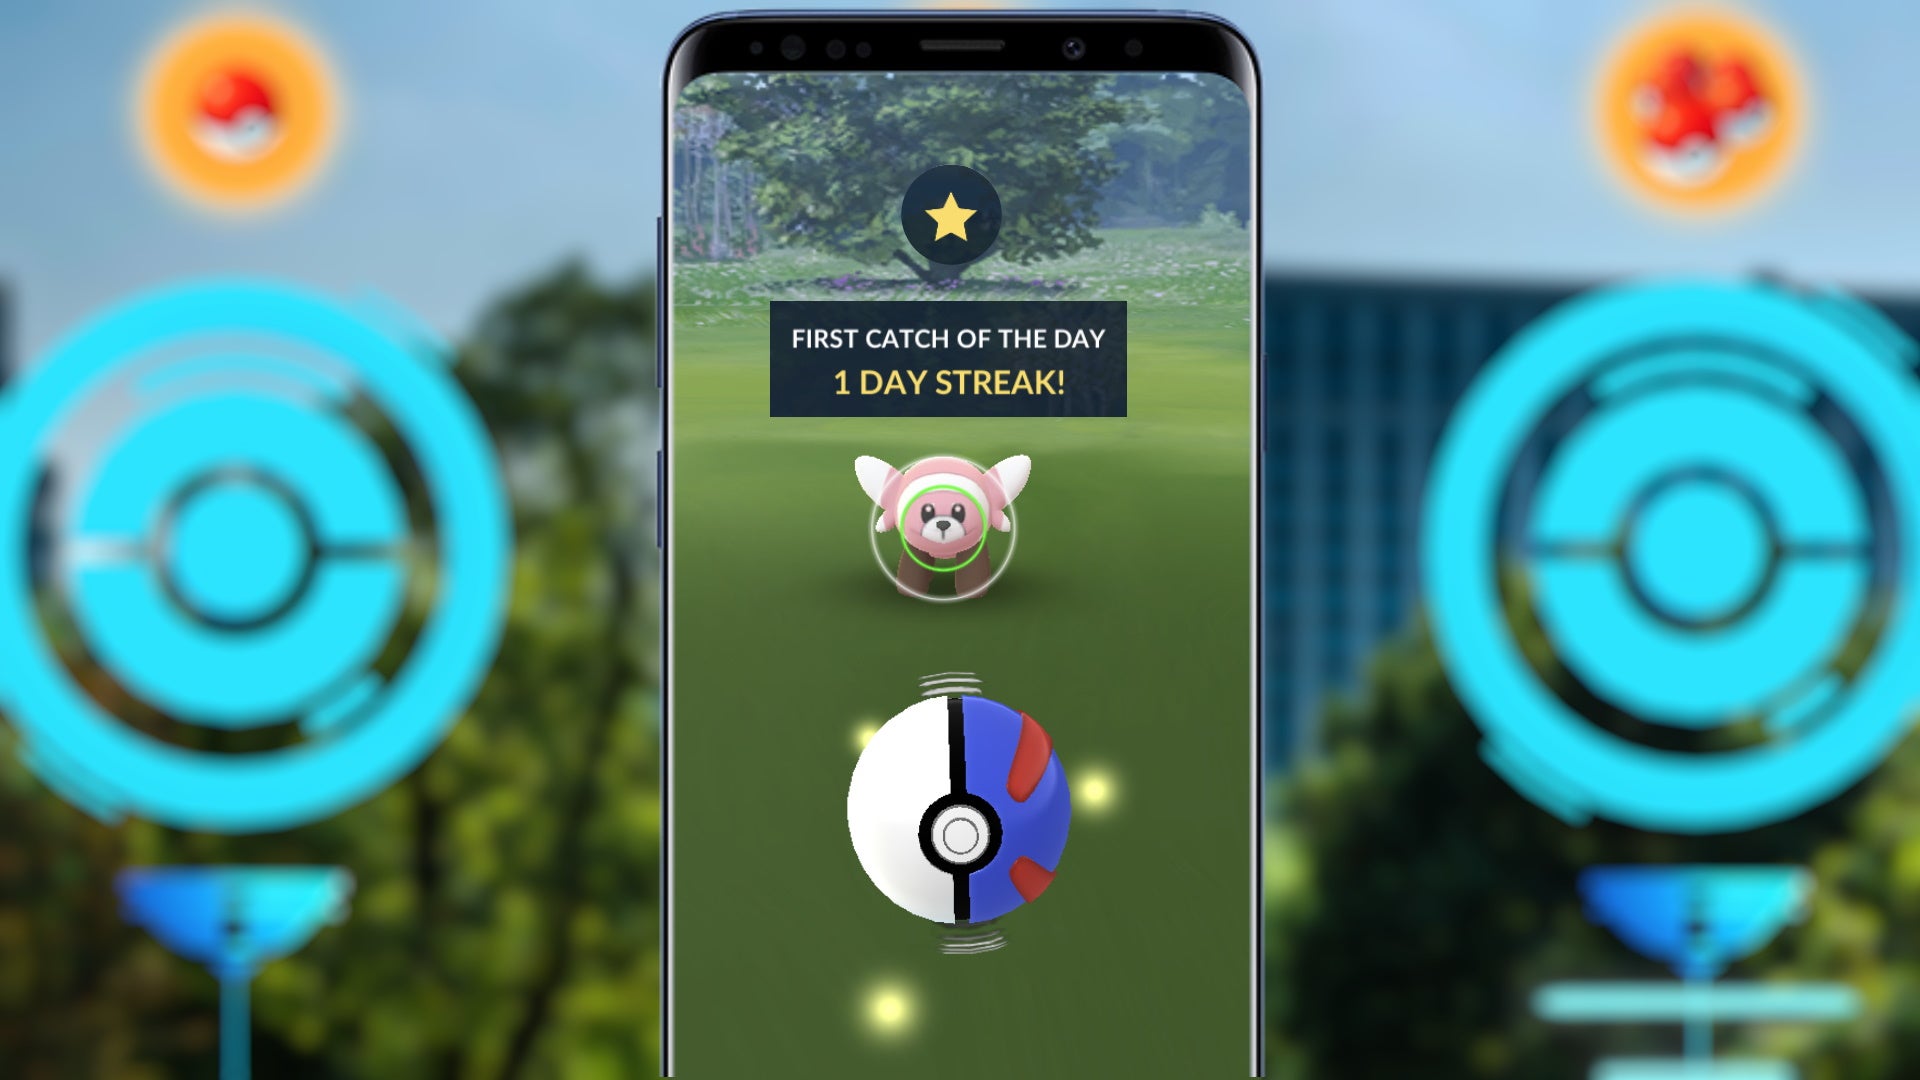 Image for Pokémon Go Daily Bonus rewards for streaks, first catch and Pokéstop of each day